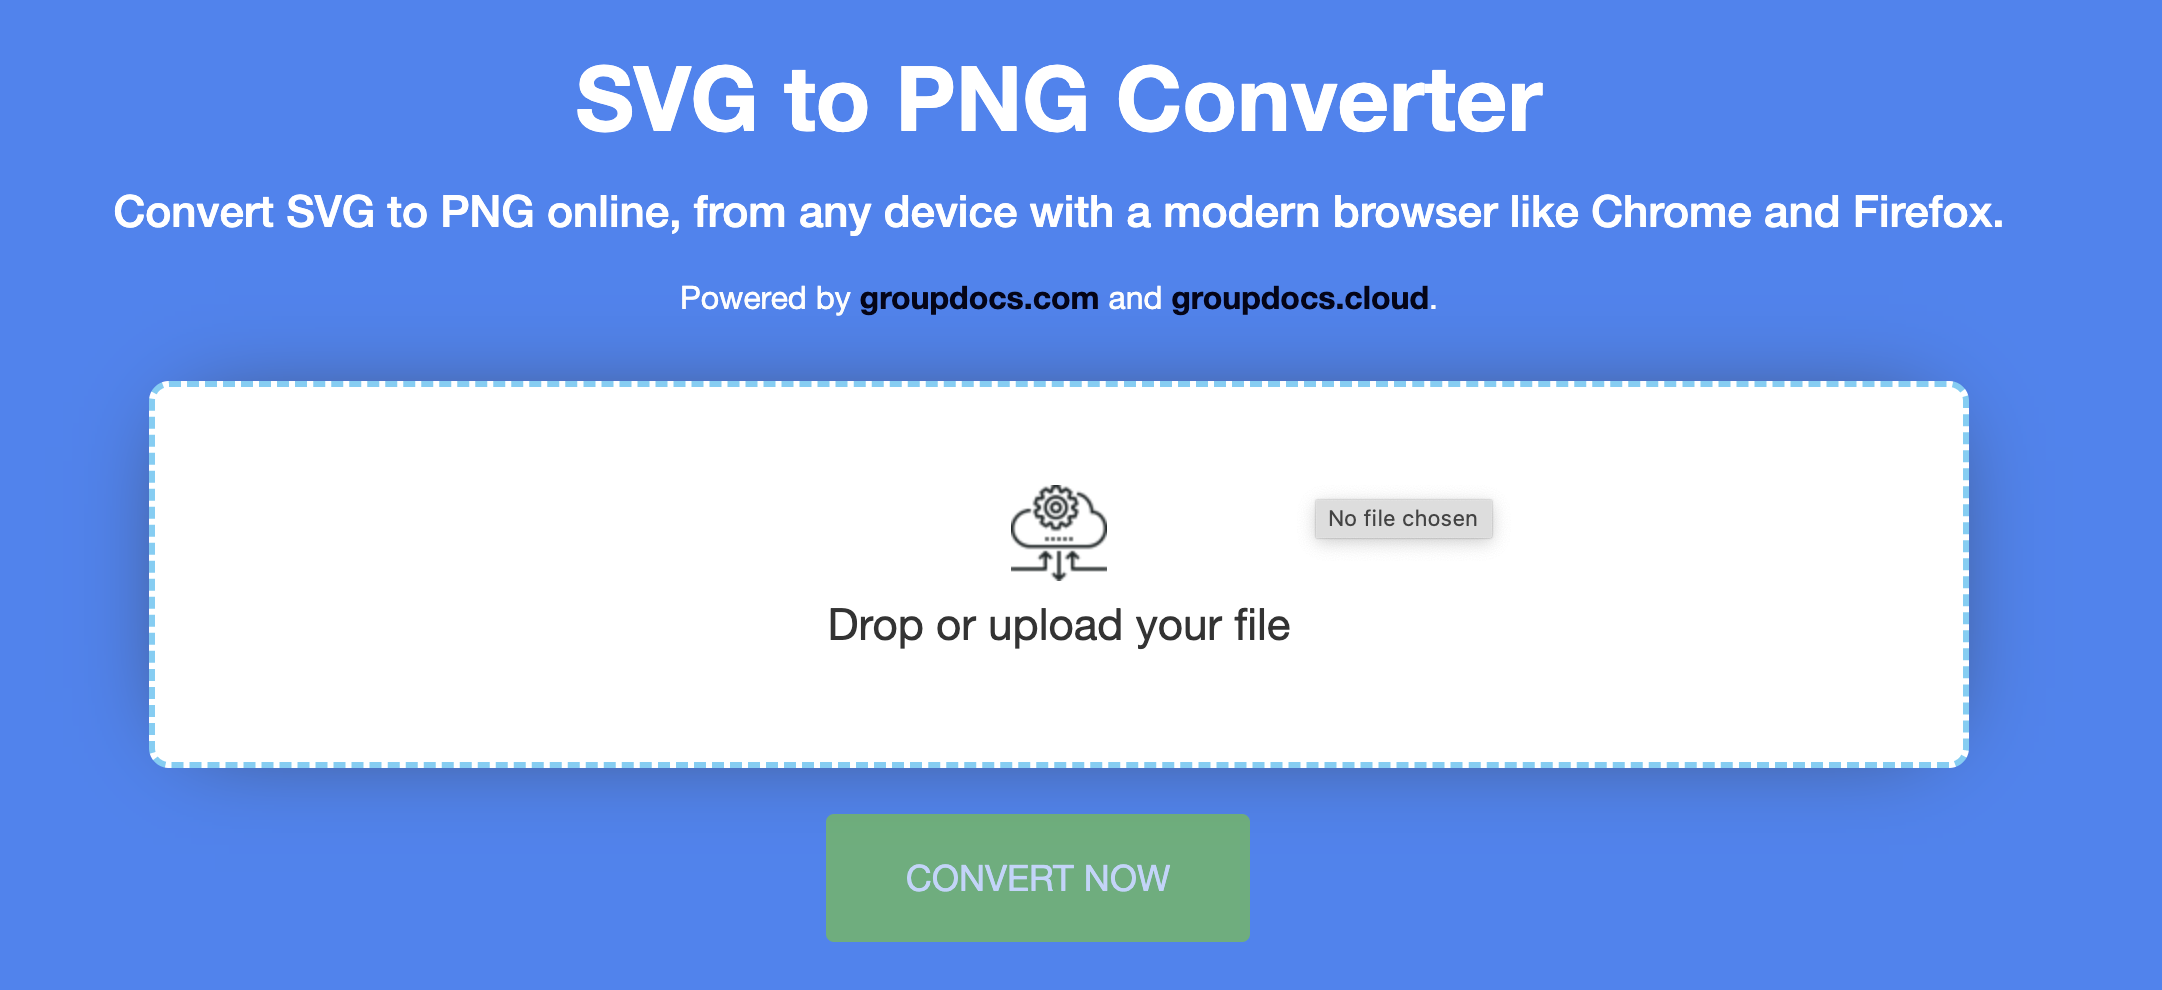 convertir SVG a PNG en línea